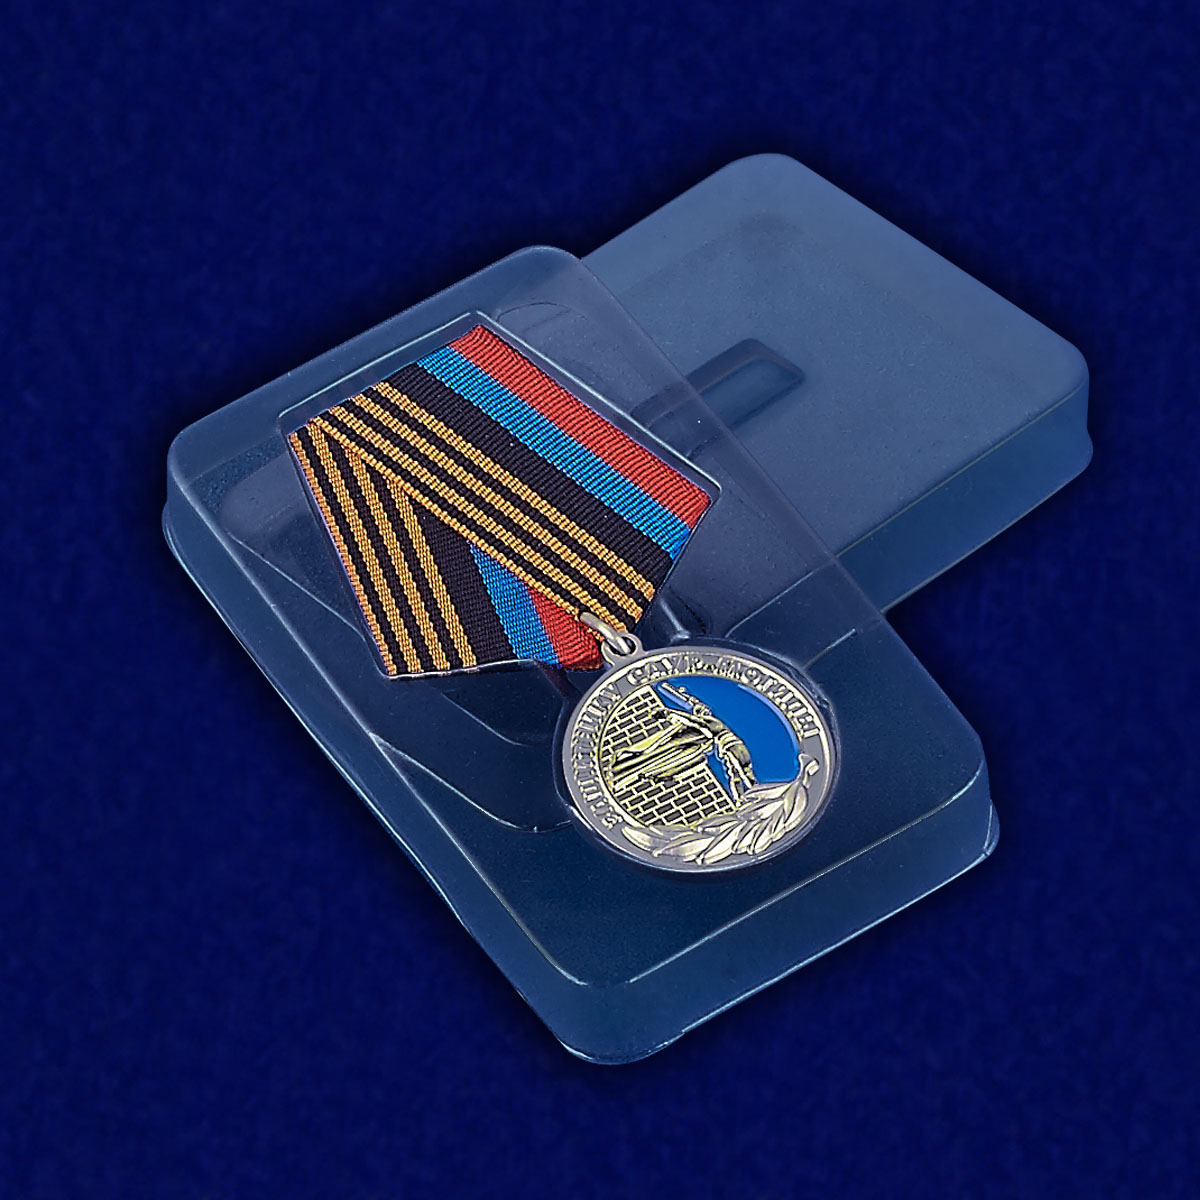 Медаль "Защитнику Саур-Могилы" ДНР 